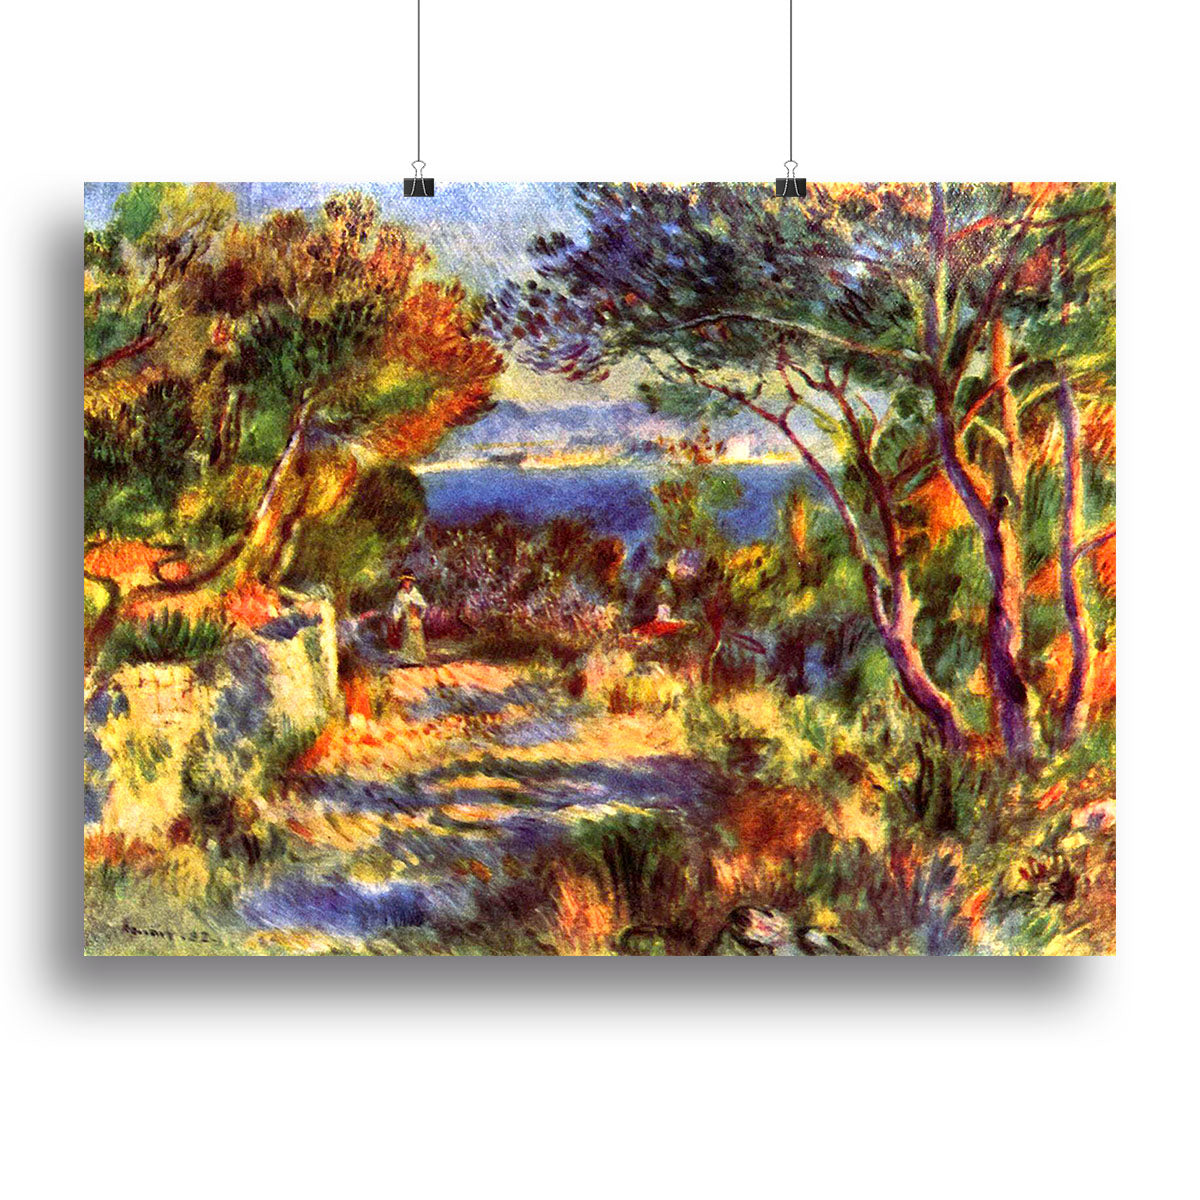 Le Staque by Renoir Canvas Print or Poster - Canvas Art Rocks - 2